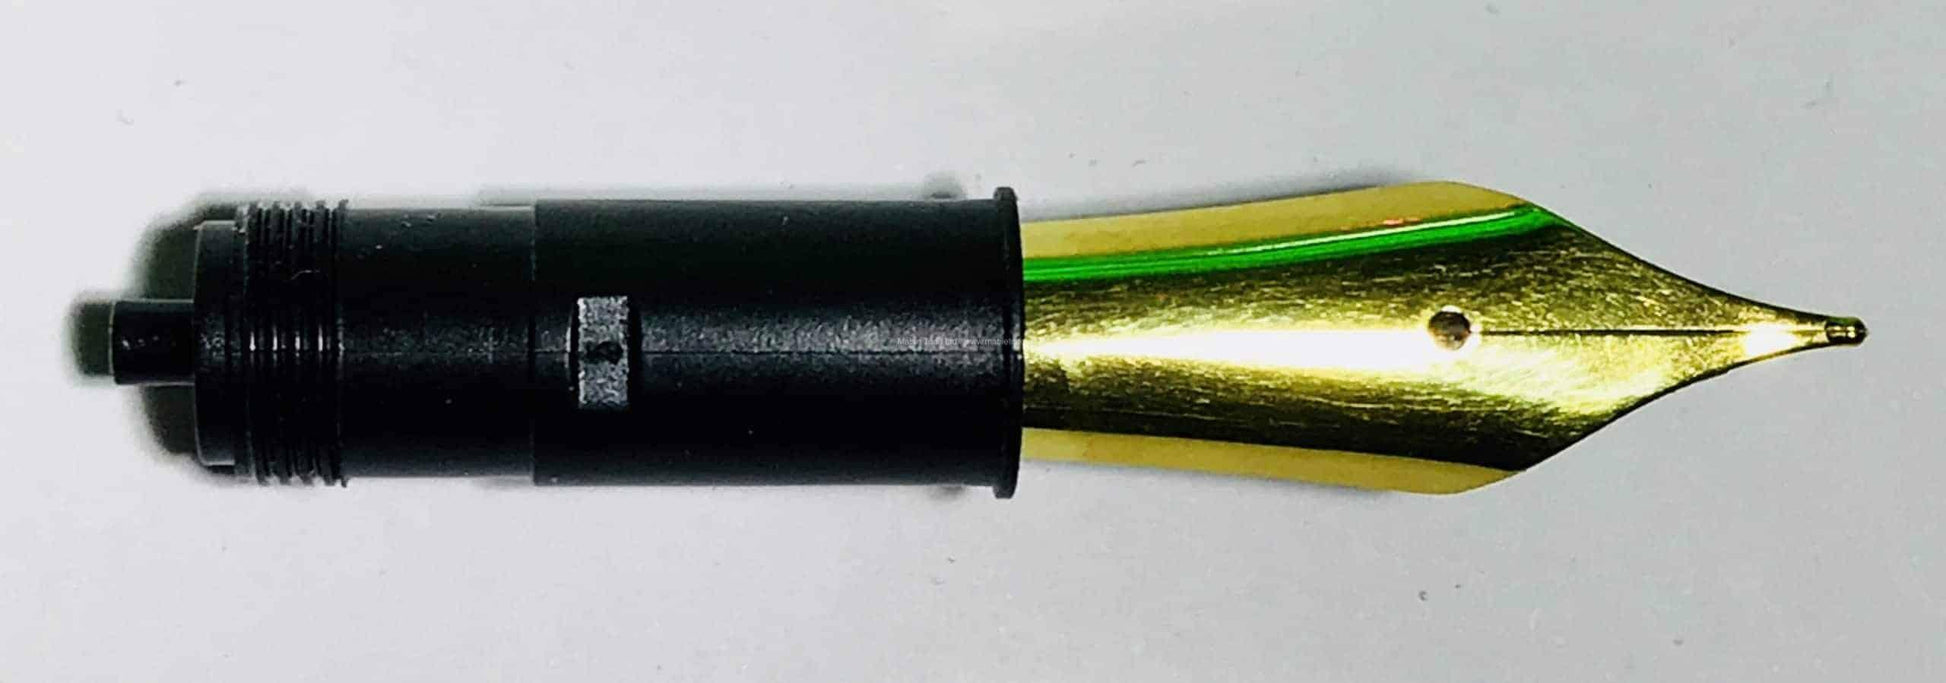 Bock Size 5 Fountain Pen Nib - Medium - Kitless Pen Making - UK Pen Blanks